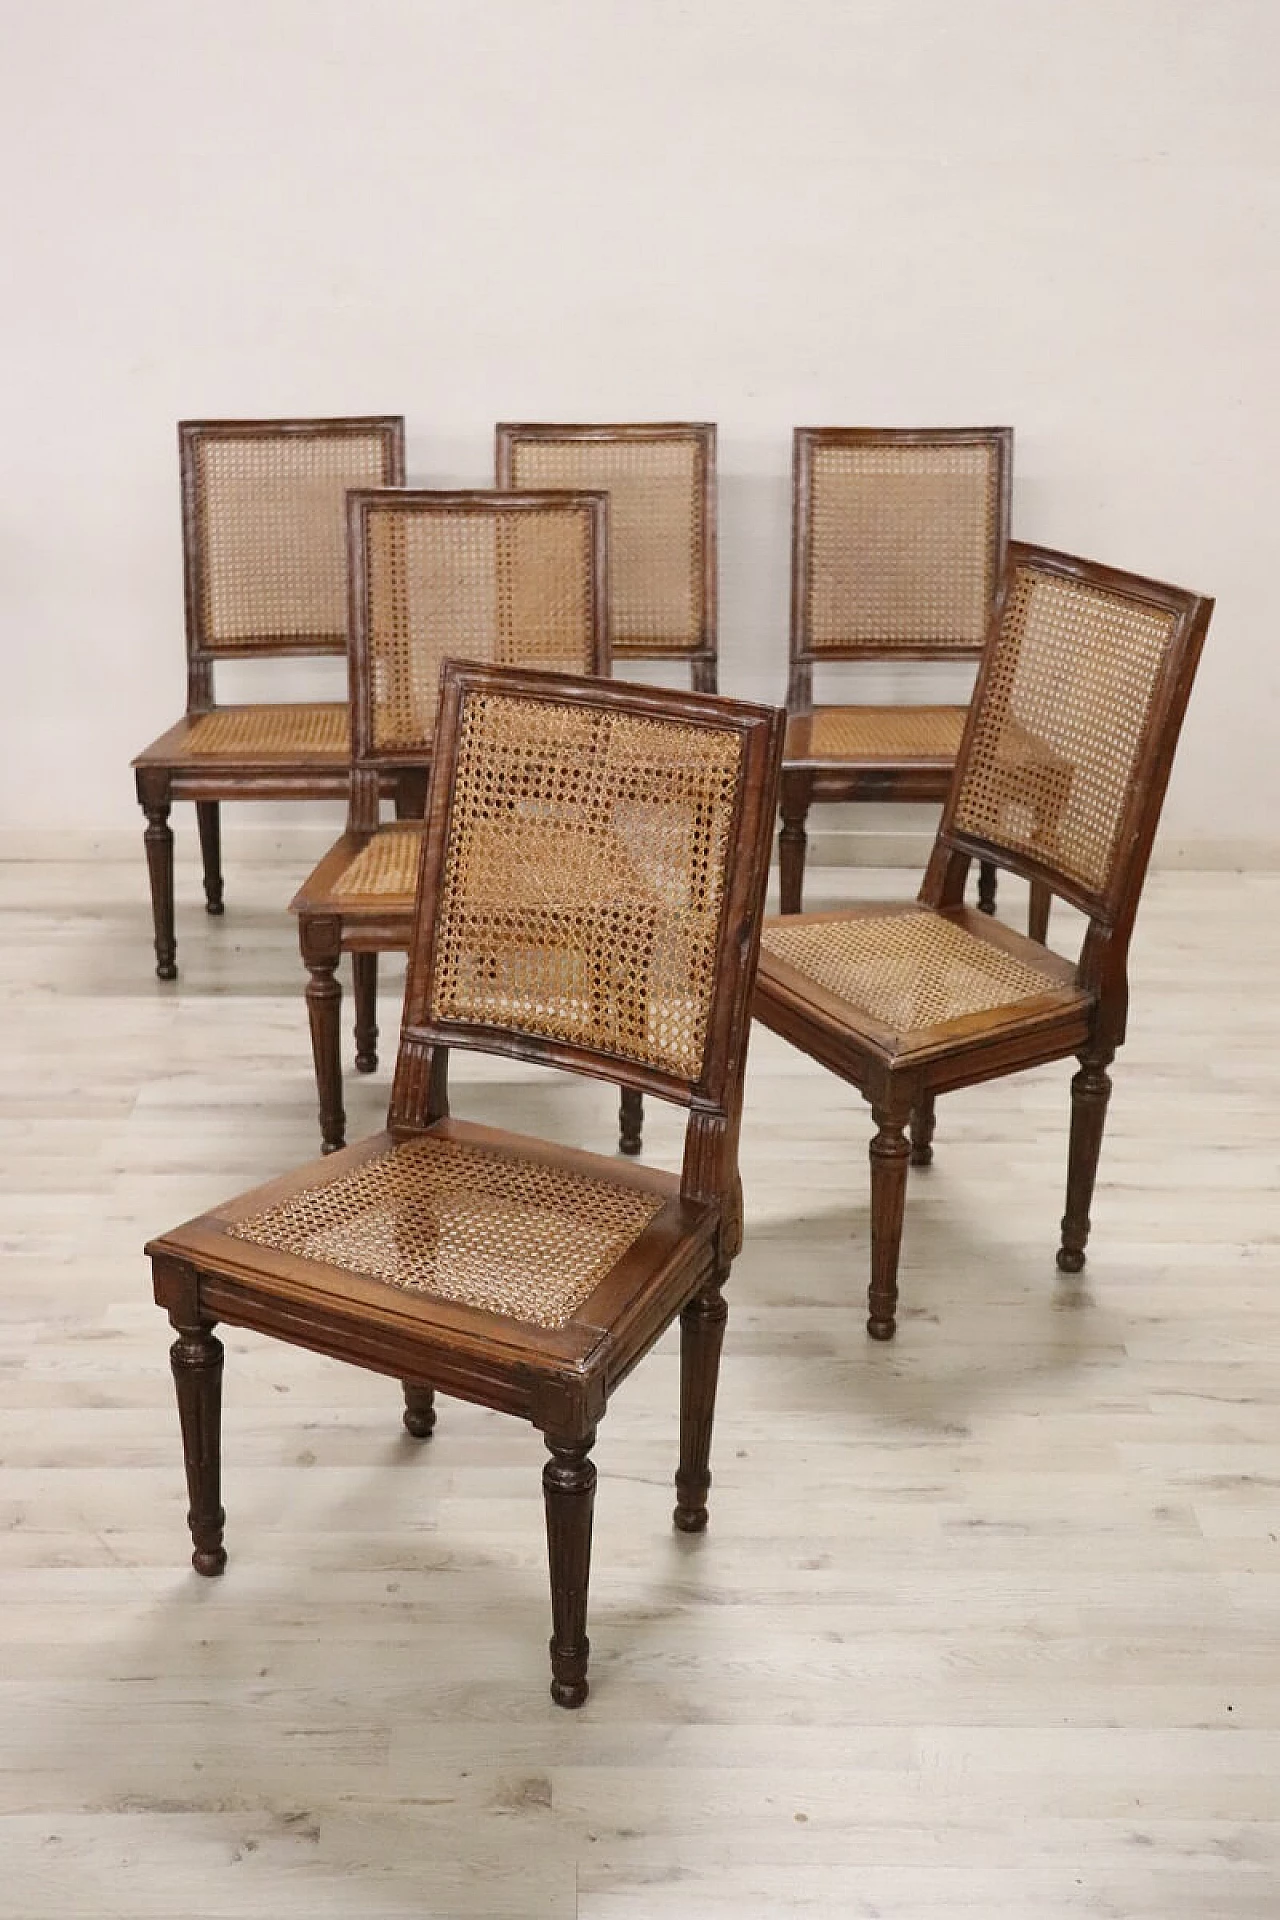 6 Vienna walnut and straw chairs, 18th century 2